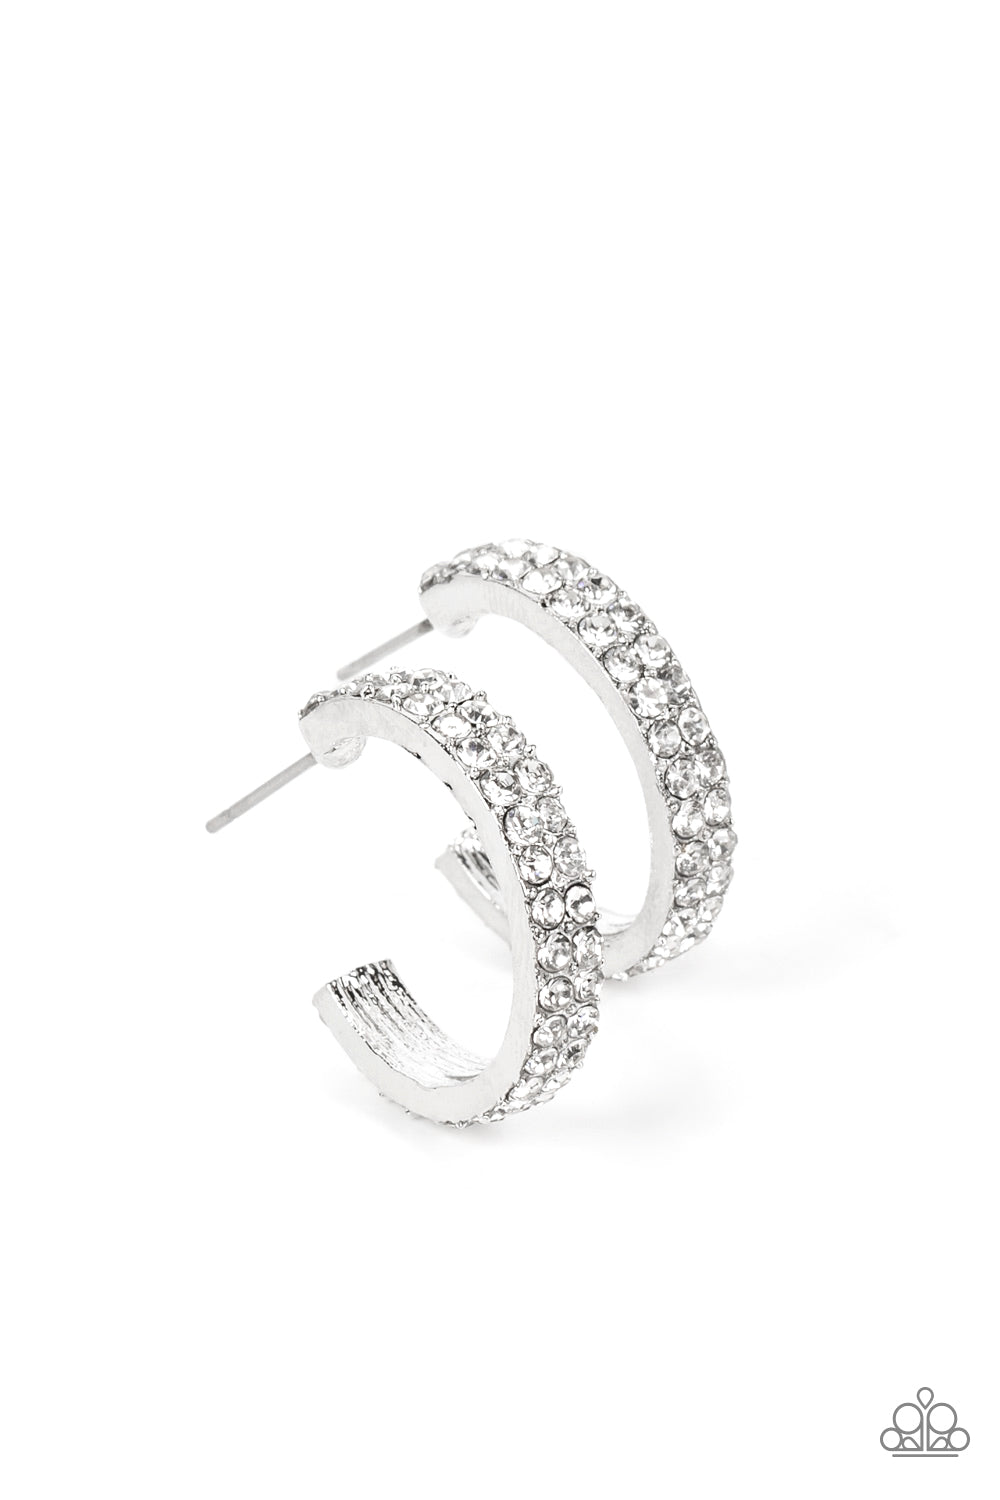 Positively Petite - white - Paparazzi earrings – JewelryBlingThing